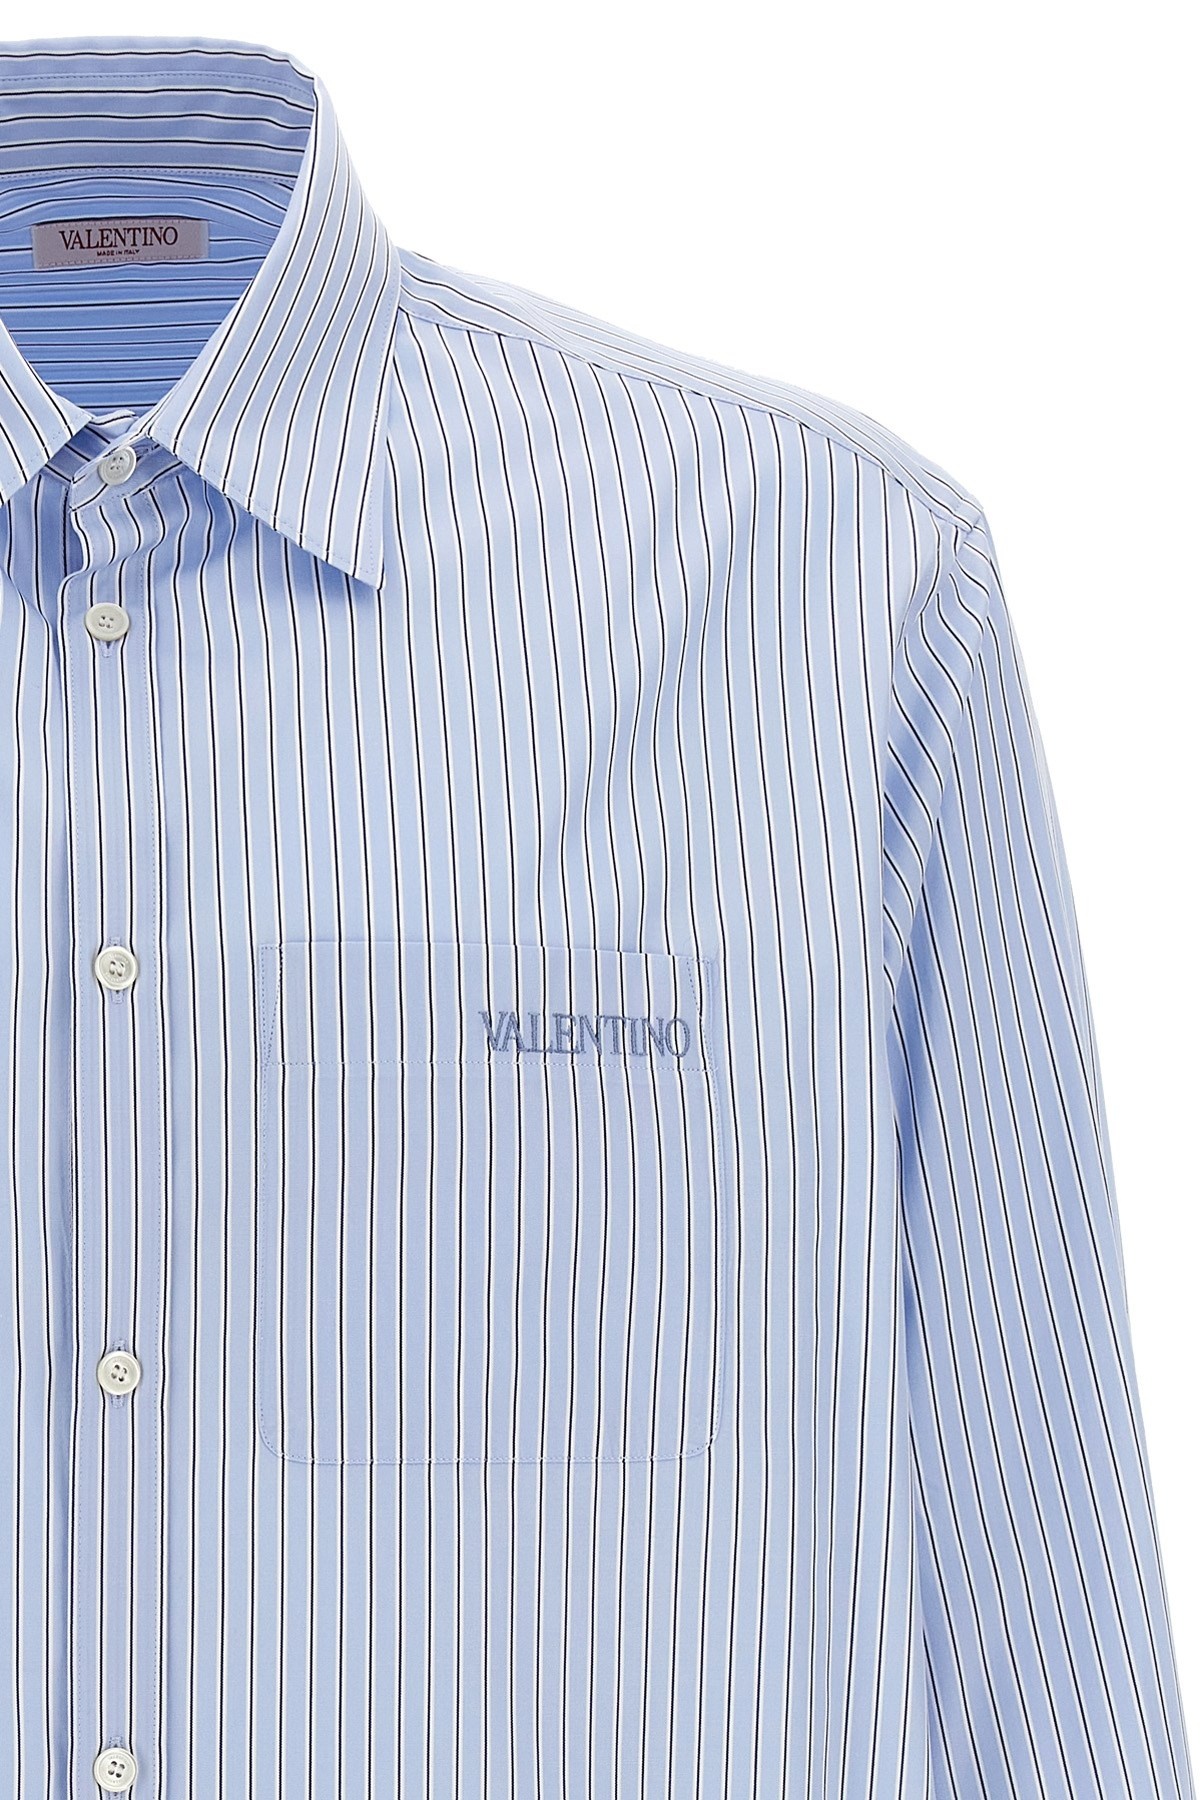 Valentino striped shirt - 4